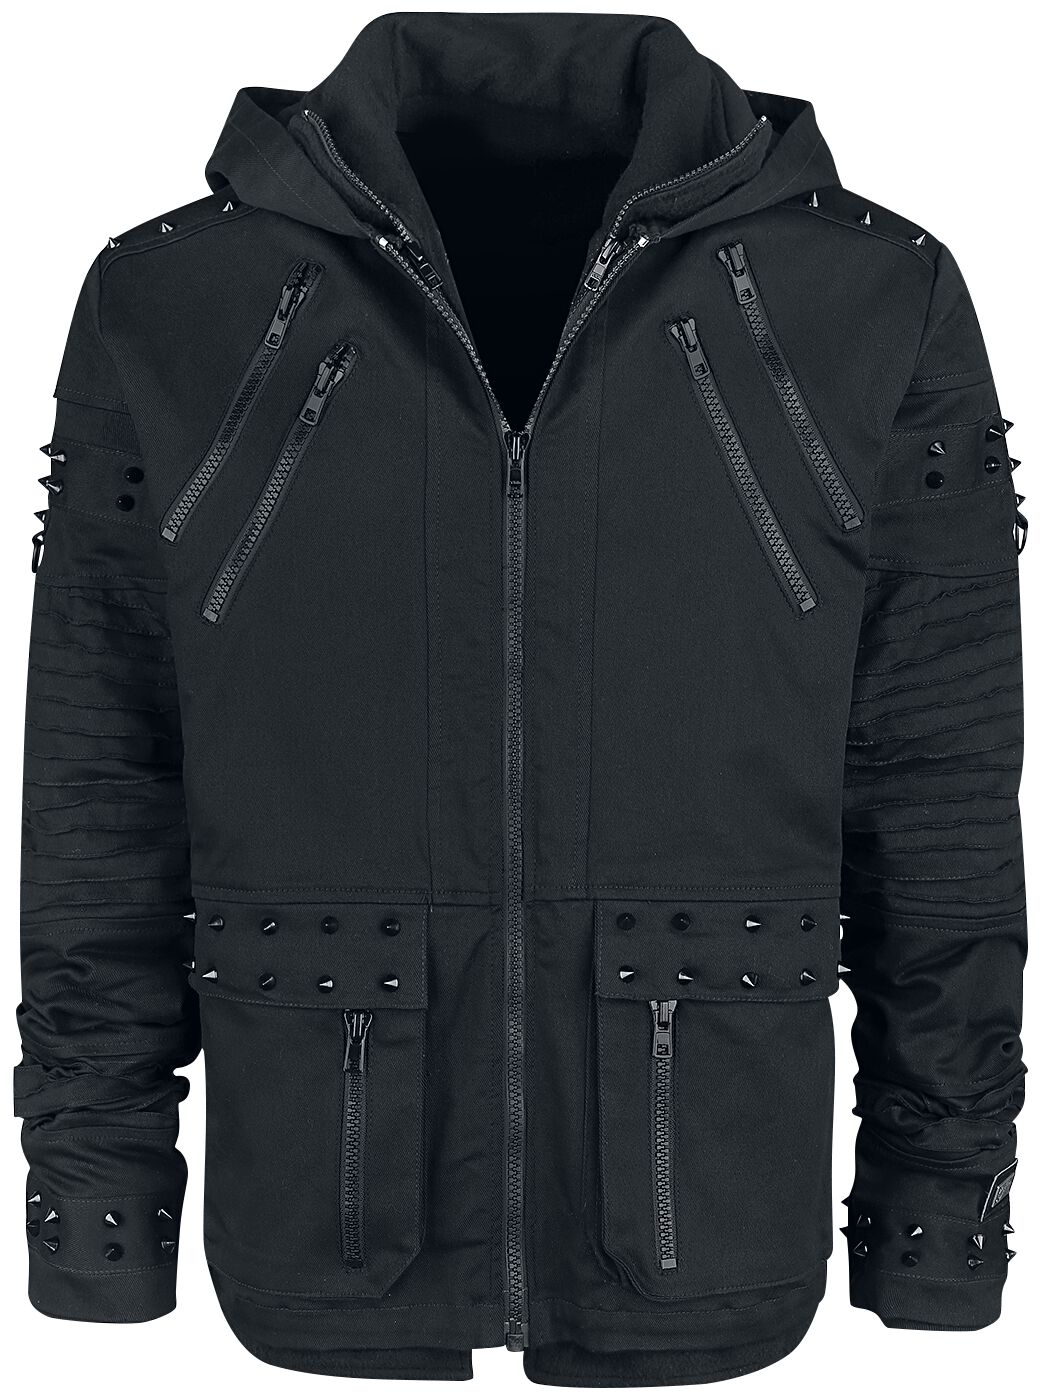 Vixxsin Black Chrome Jacket Winterjacke schwarz in XXL